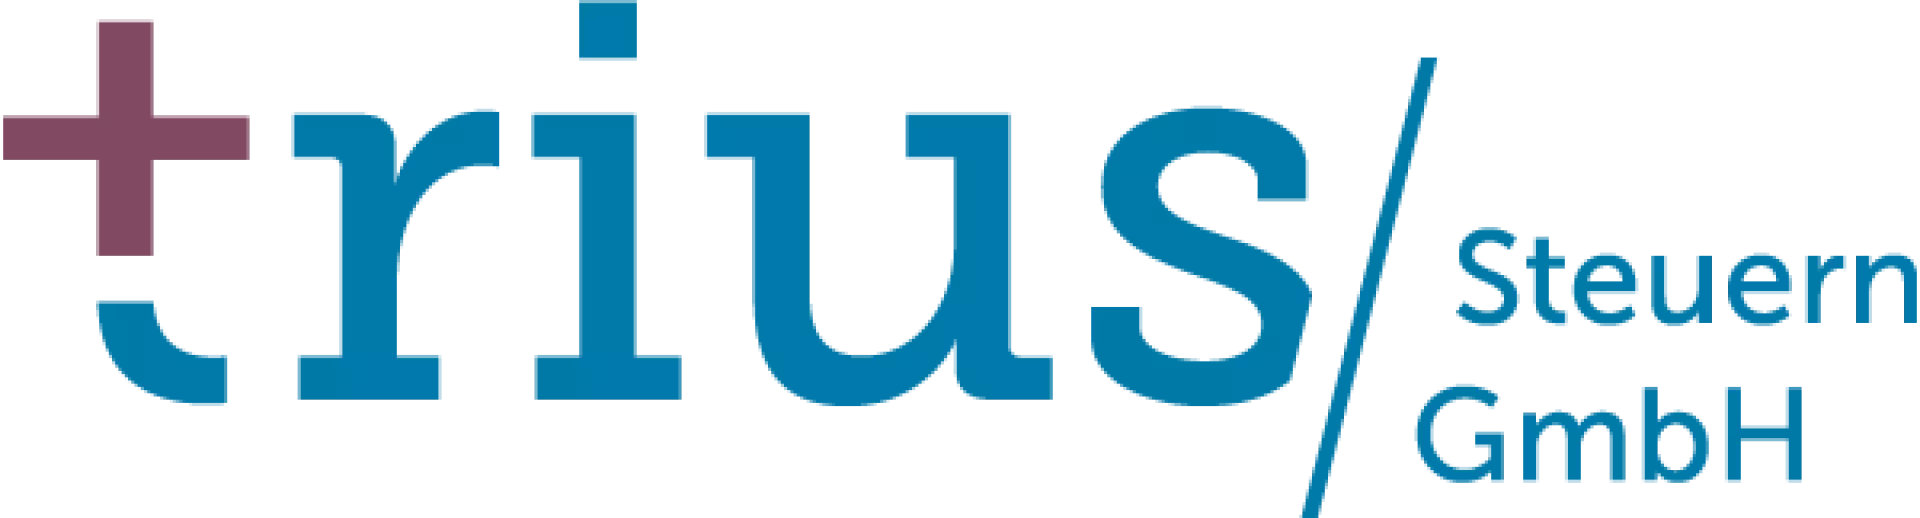 Logo Trius Steuern GmbH